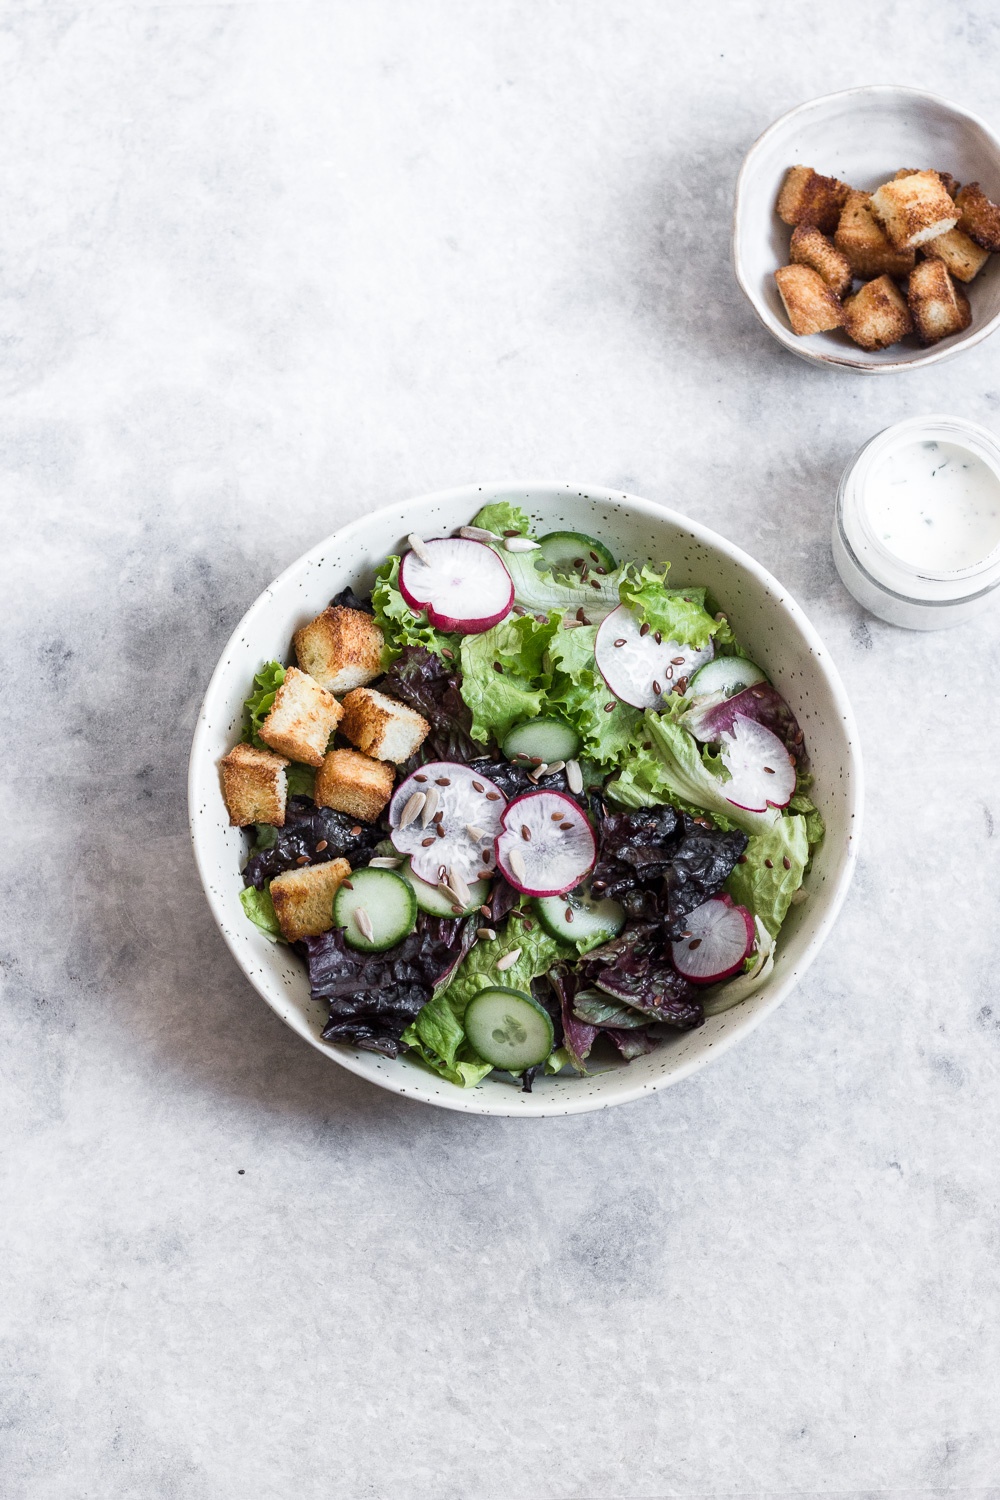 Quick Salad With Yogurt Mayonnaise Dressing - The Leaf Bowl